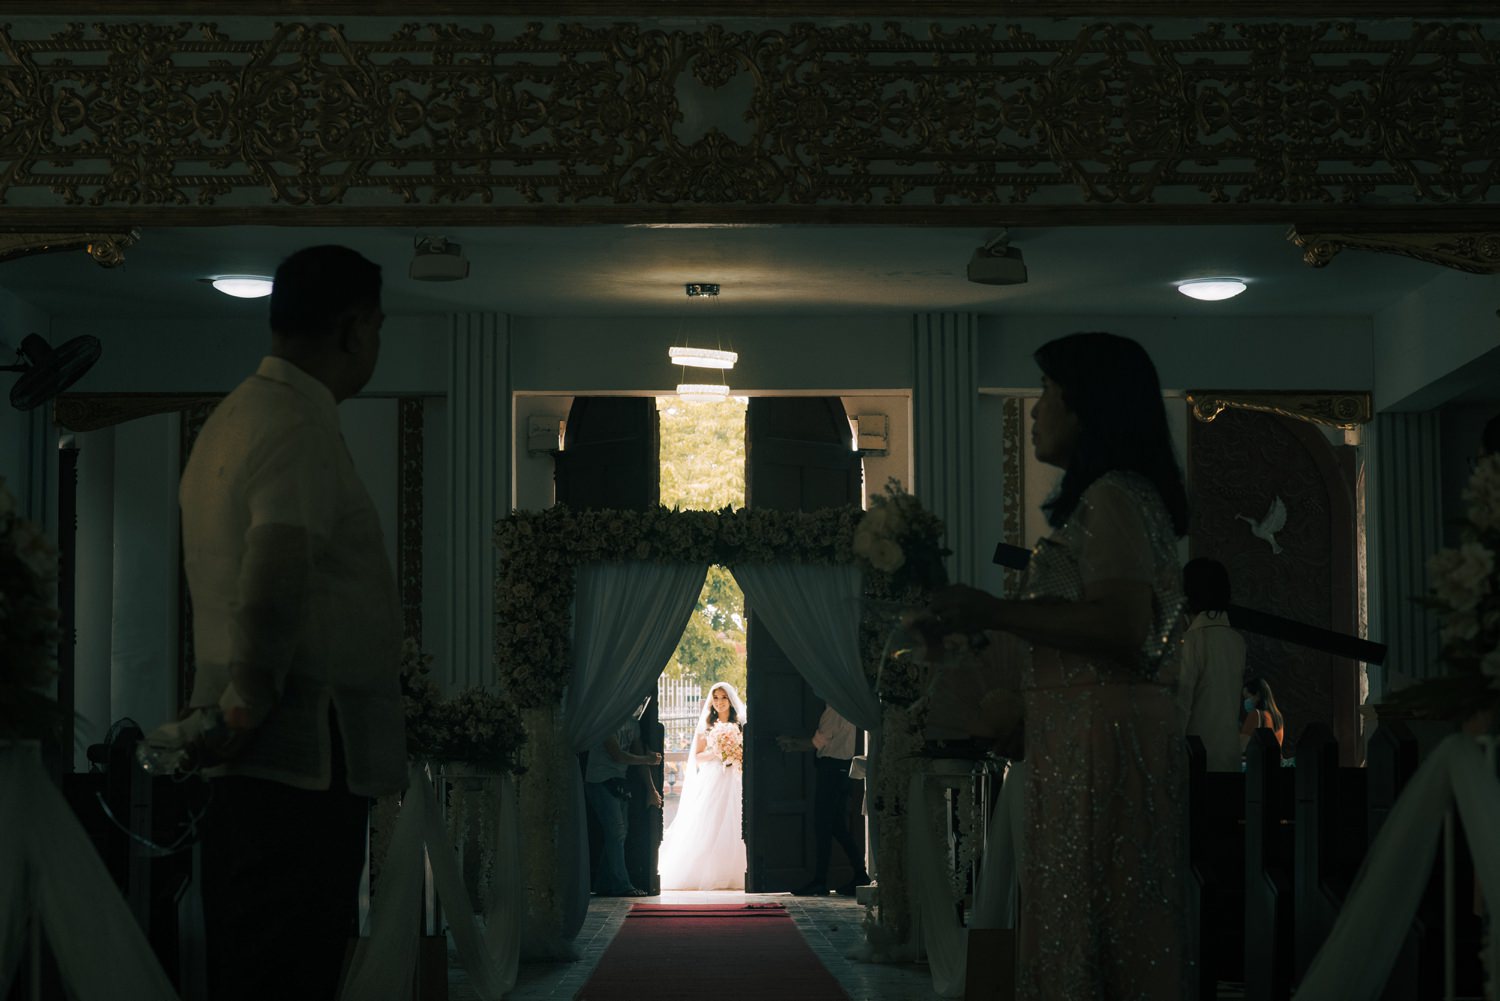 Oak St. Studios - Adrian and Odessa - Intimate Wedding Photographer Philippines 